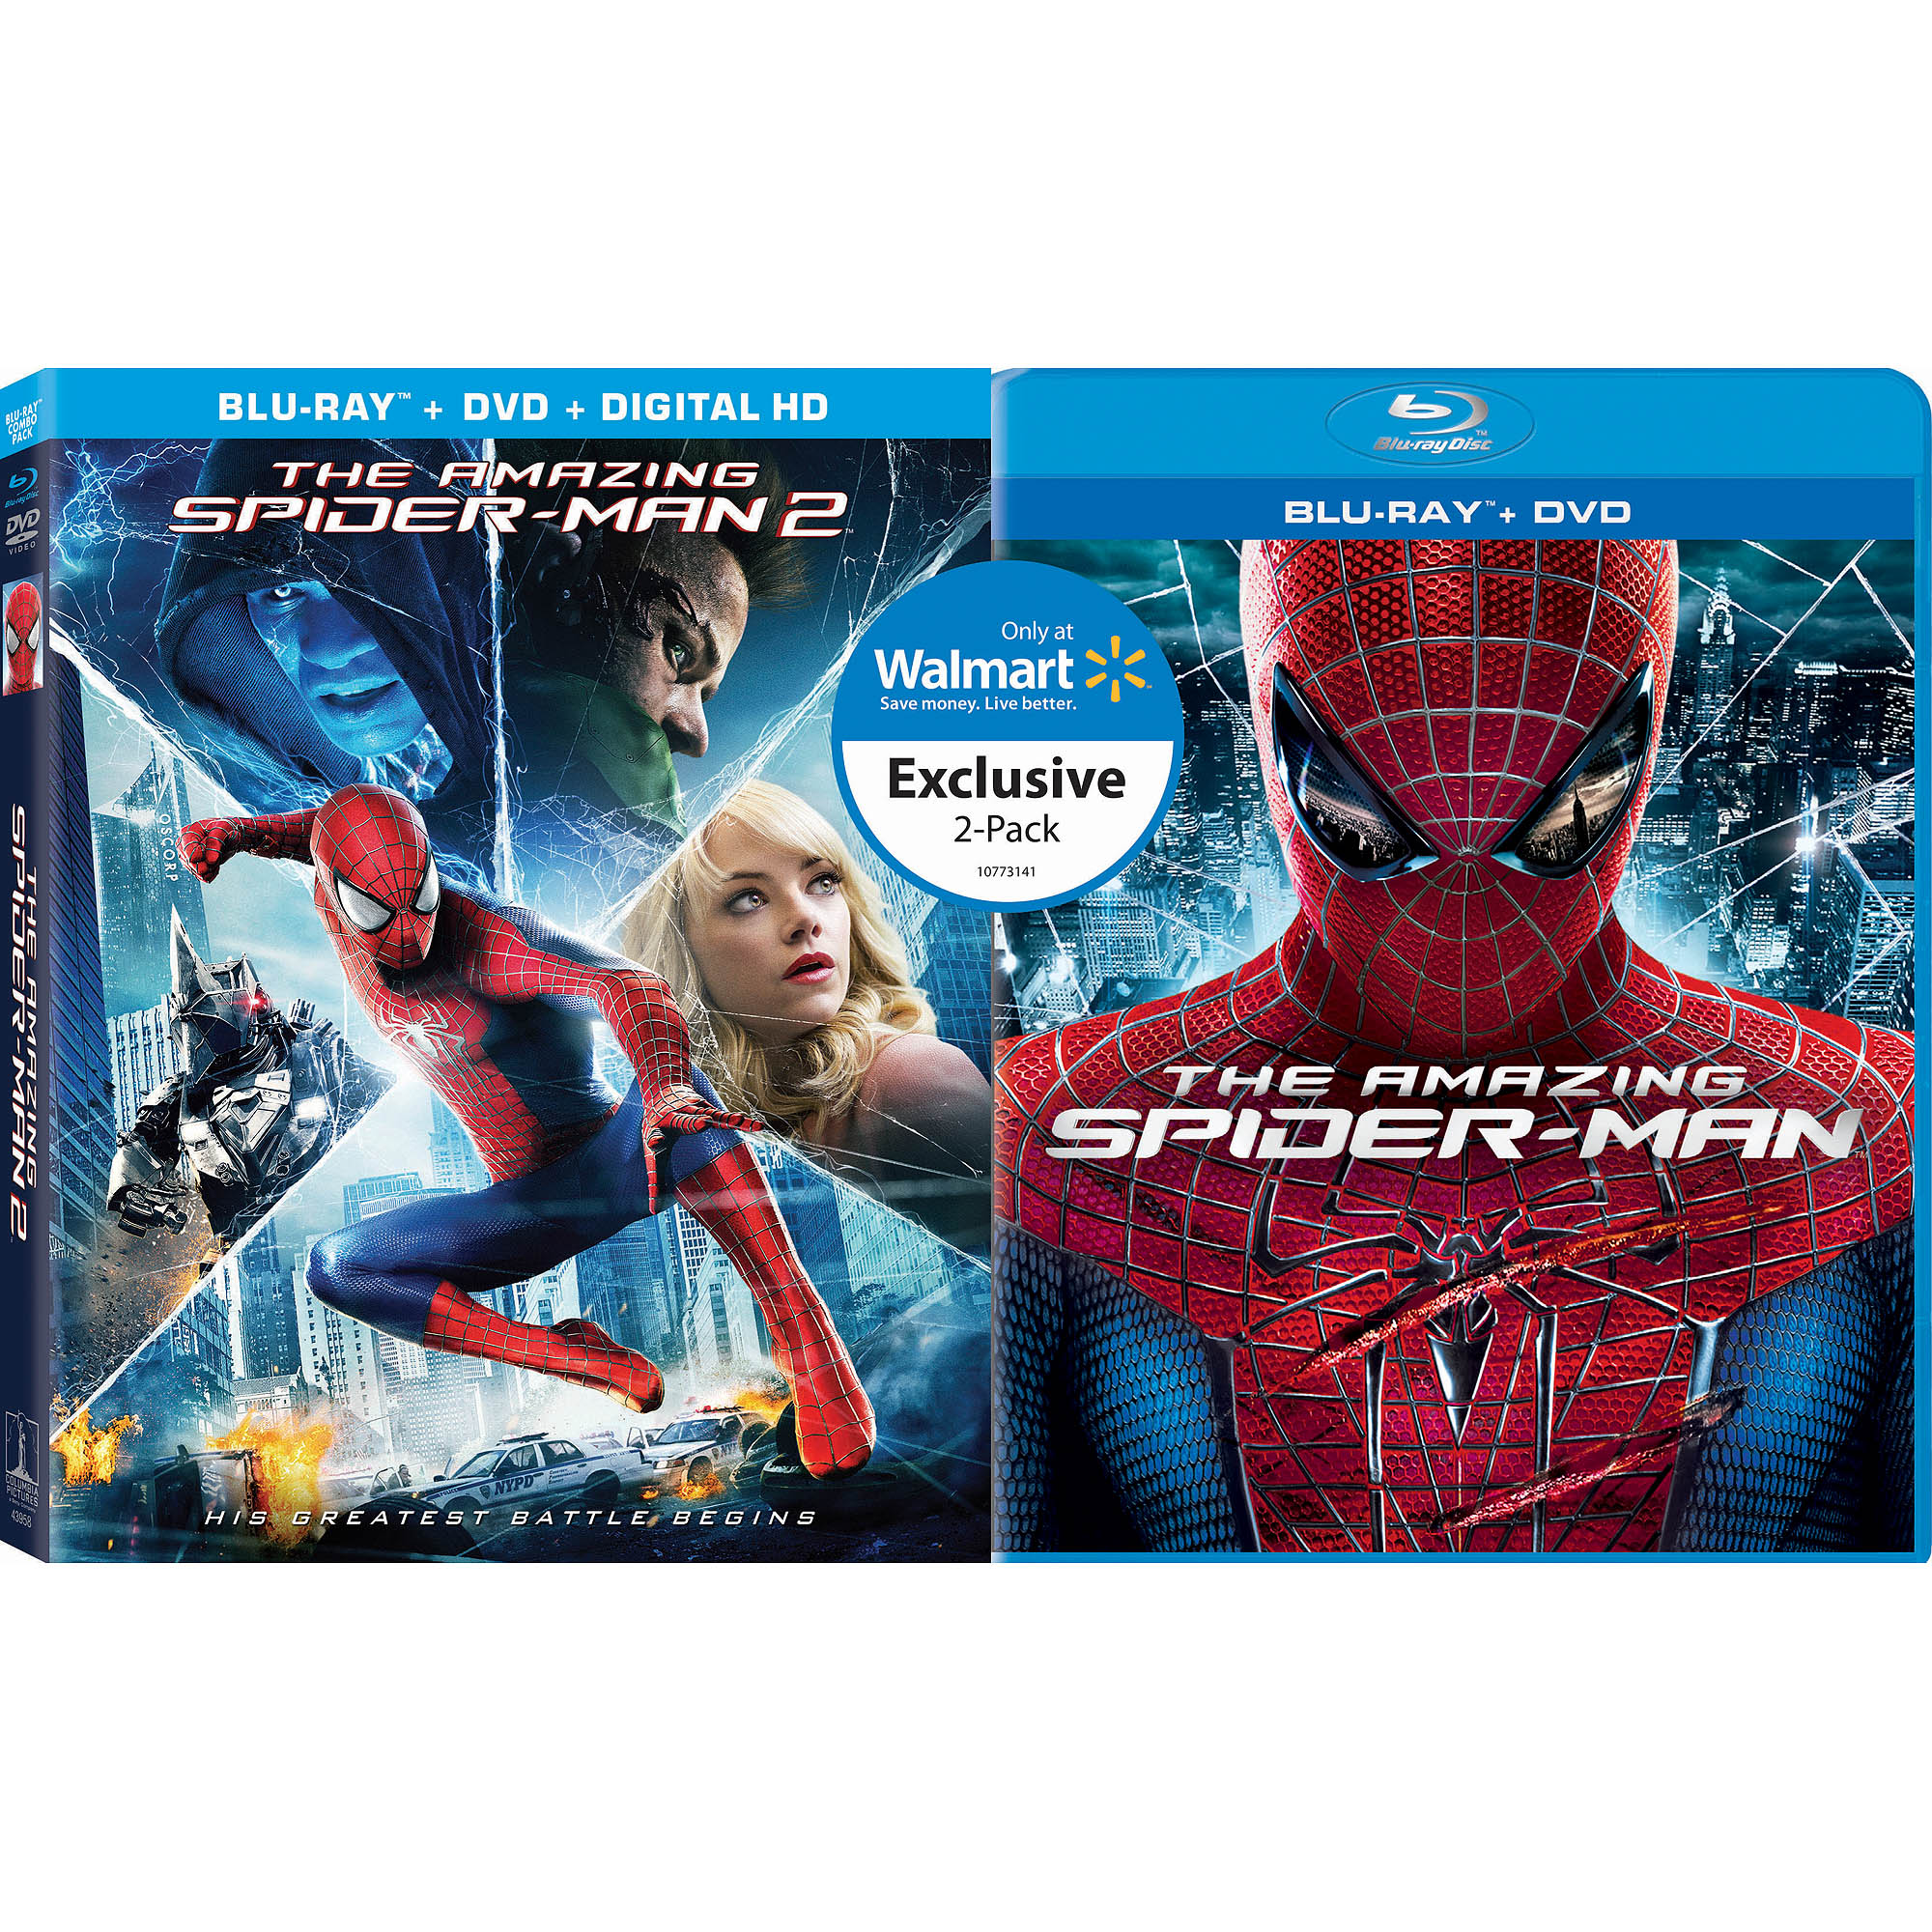 The Amazing Spider-man / The Amazing Spider-man 2 (Blu-ray + DVD HD) (Walmart Exclusive) - image 1 of 1